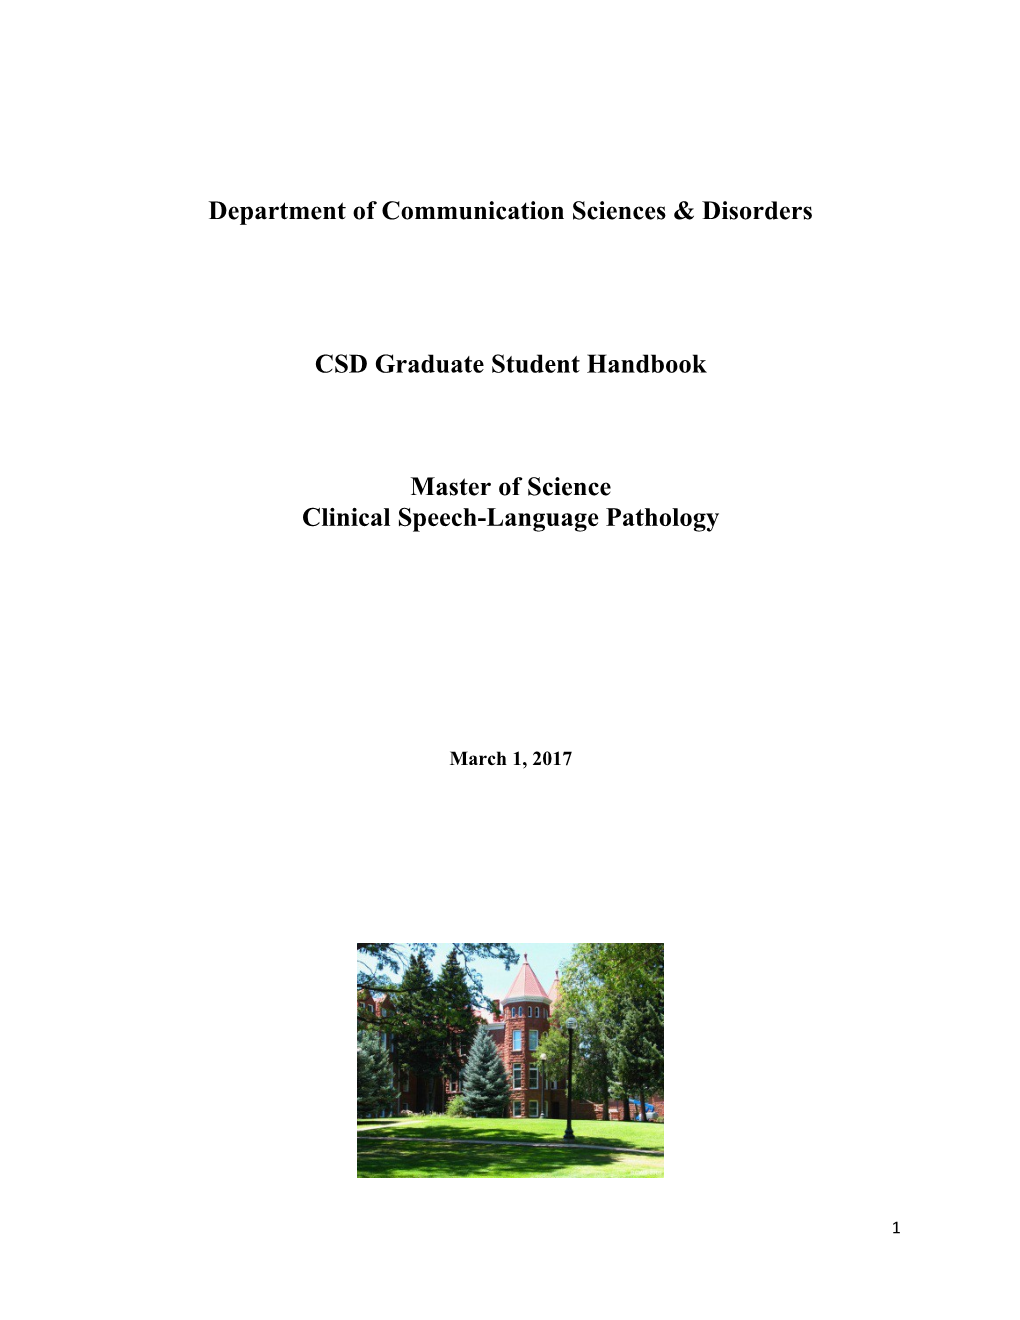 CSD Graduate Student Handbook July 2016